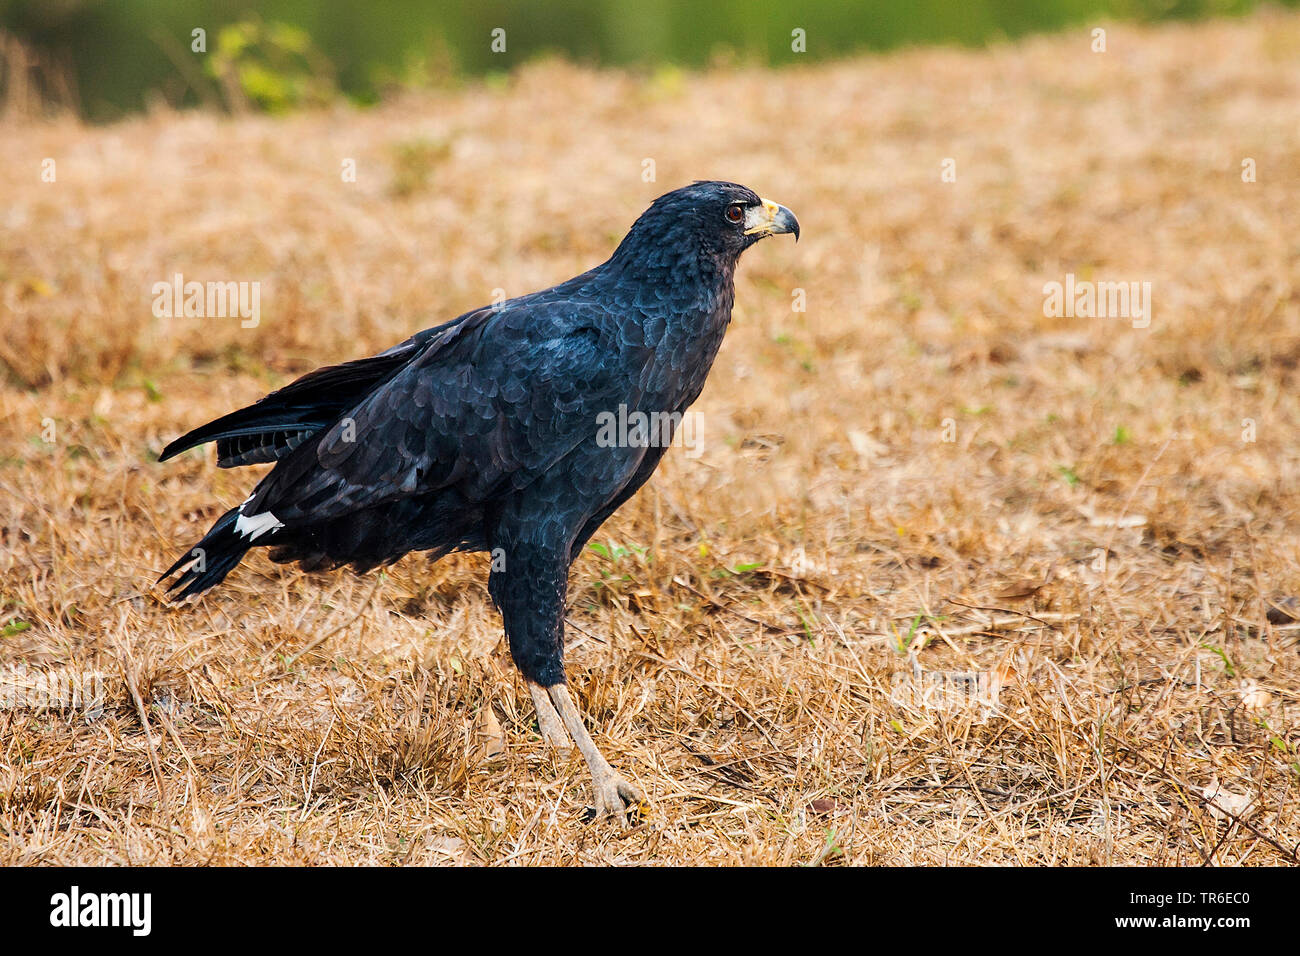 great black hawk (Buteogallus urubitinga), sitting in a dried meadow, side view, Brazil, Pantanal, Pantanal Matogrossense National Park Stock Photo